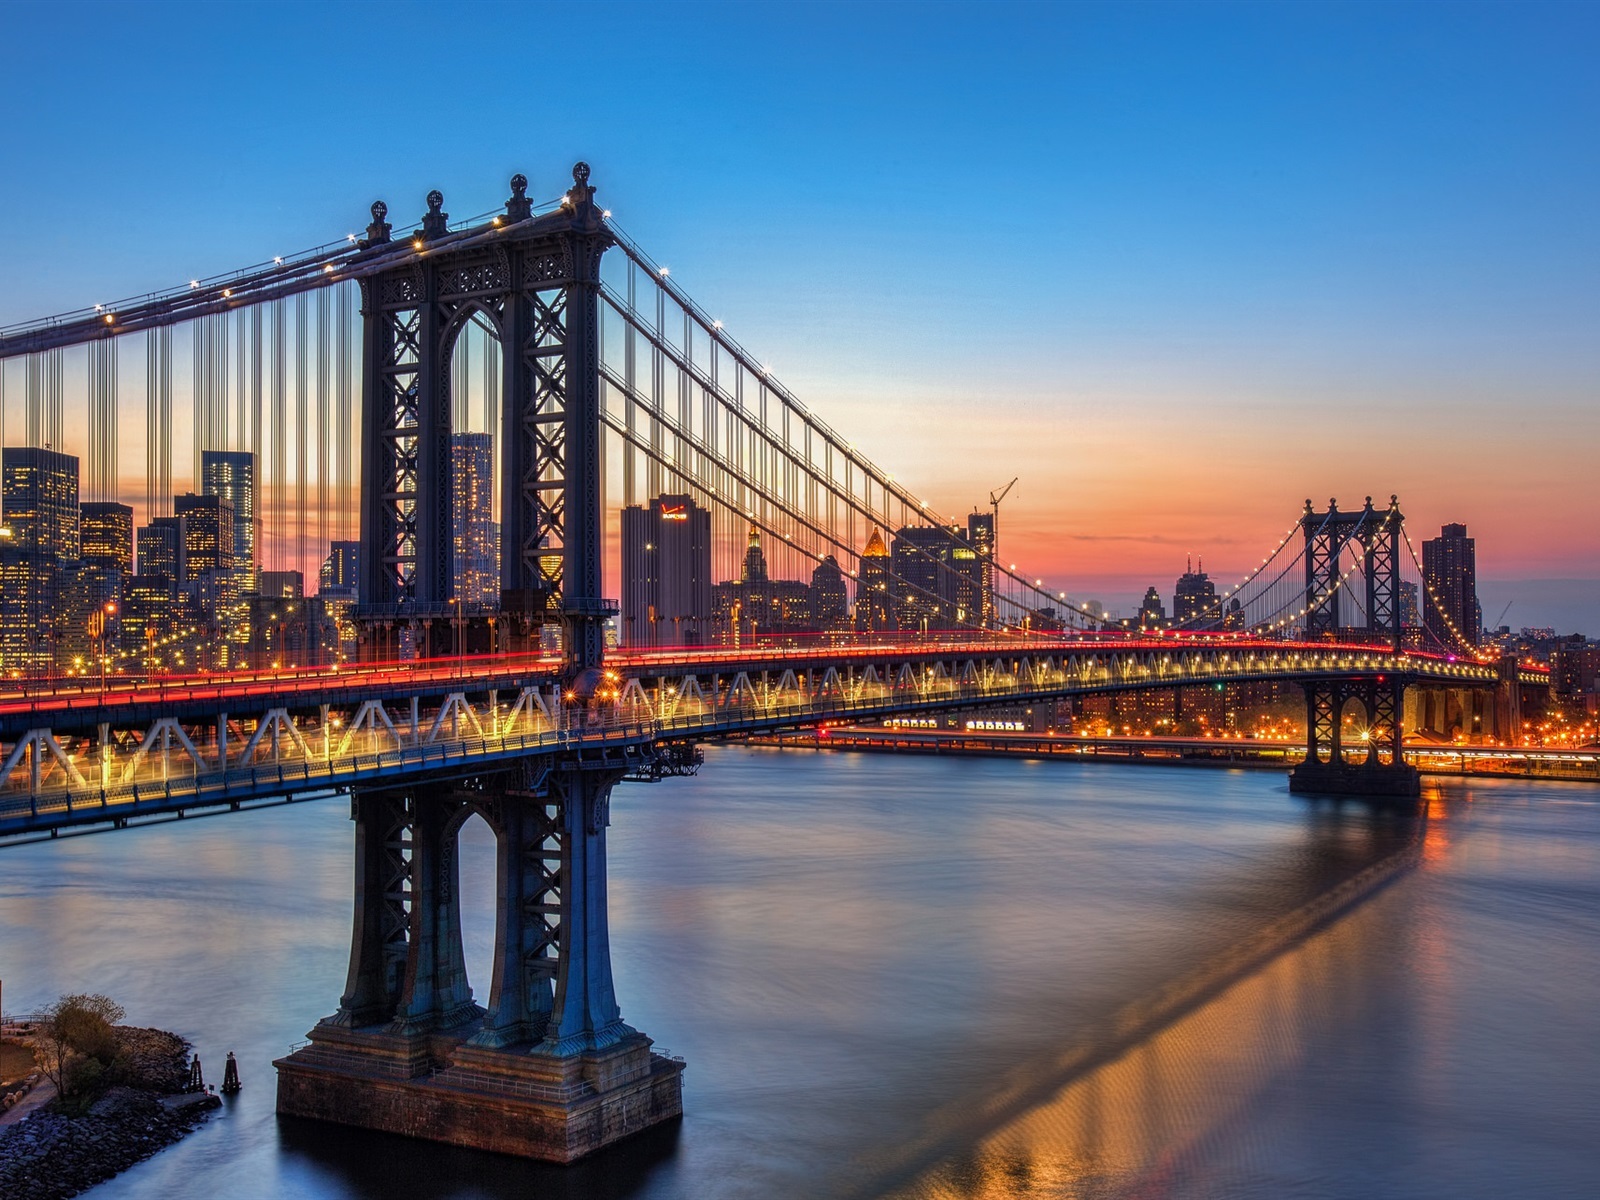 New most info. Манхэттенский мост в Нью-Йорке. Бруклинский мост, Нью-Йорк, США. Нью-Йорк мост Манхэттен закат. Мост в Америке в Манхеттене.